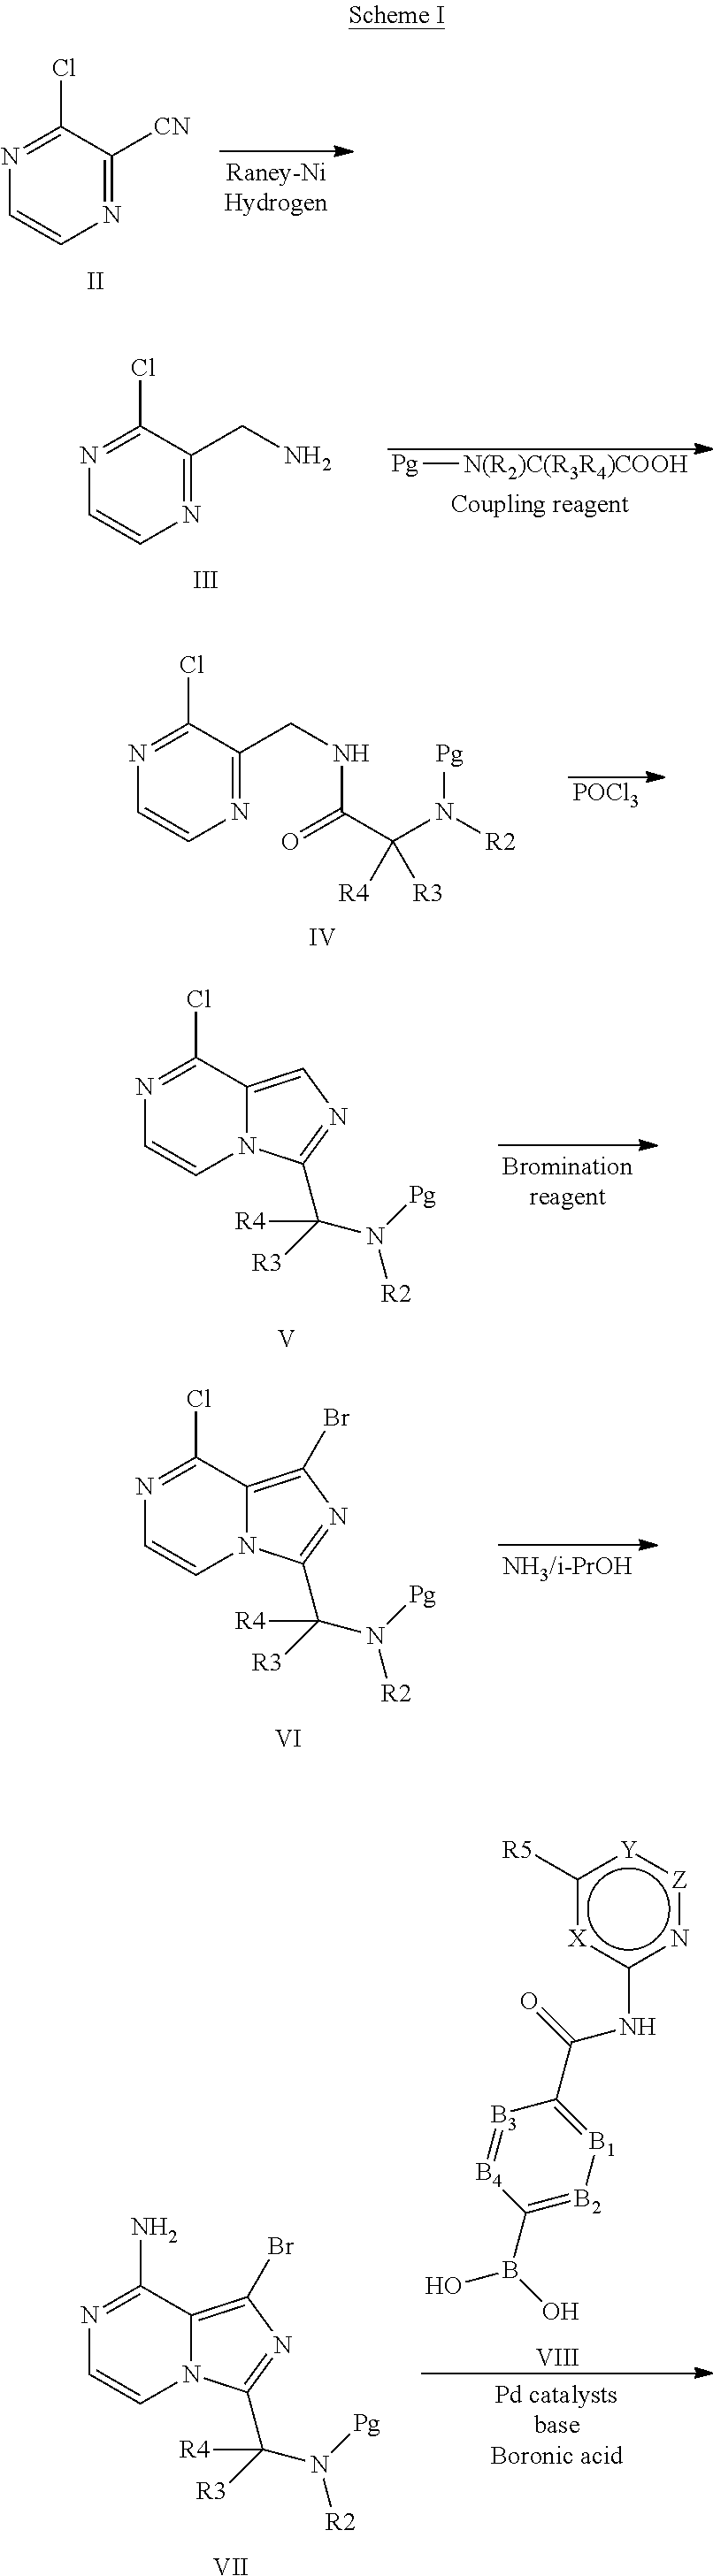 4-imidazopyridazin-1-yl-benzamides and 4-imidazotriazin-1-yl-benzamides as Btk inhibitors